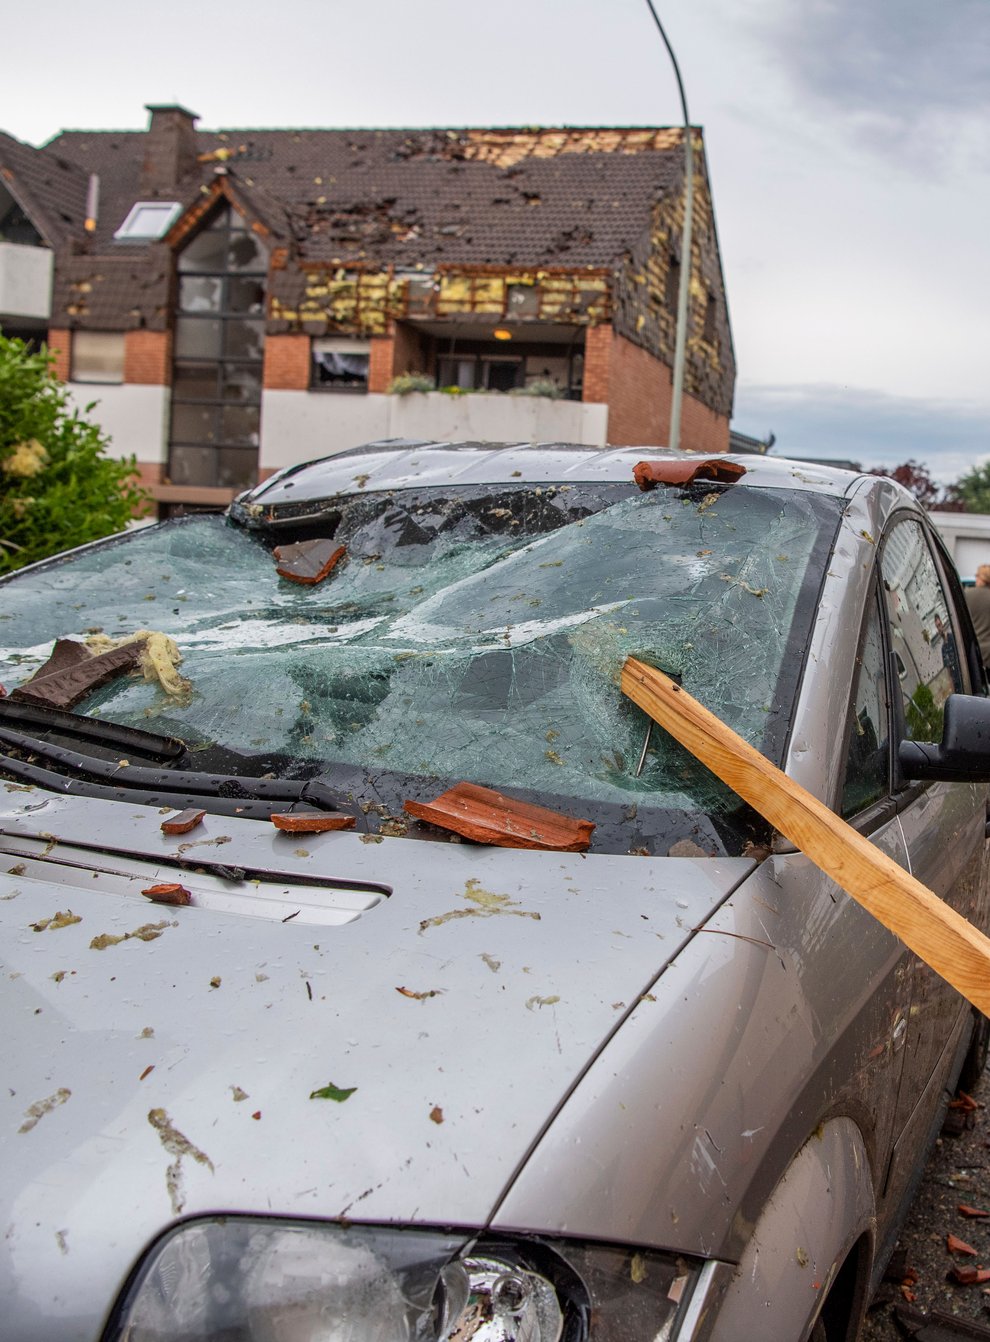 Cars were damaged by a tornado in Paderborn, Germany (Lino Mirgeler/dpa via AP)